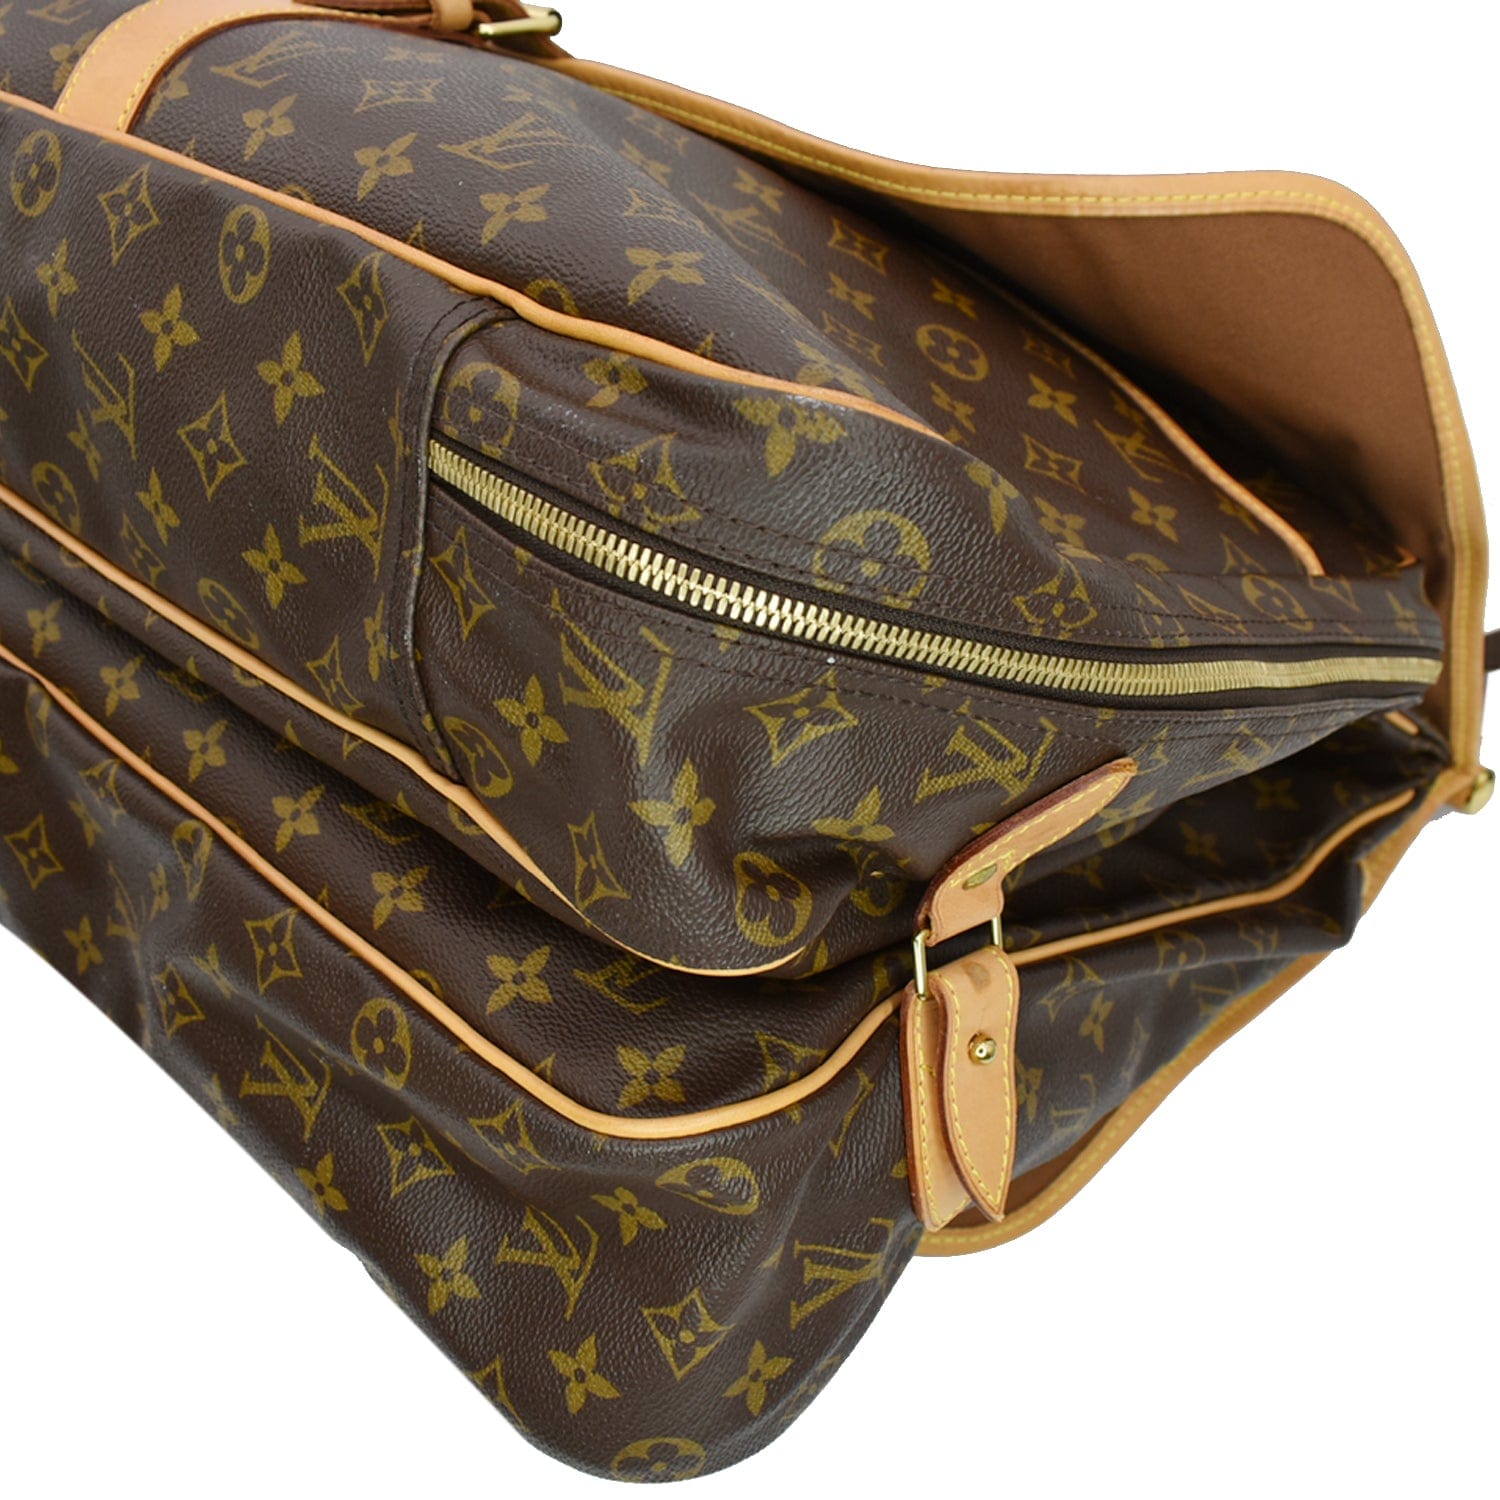 Vintage Louis Vuitton Sac Chasse Monogram Canvas Travel Bag